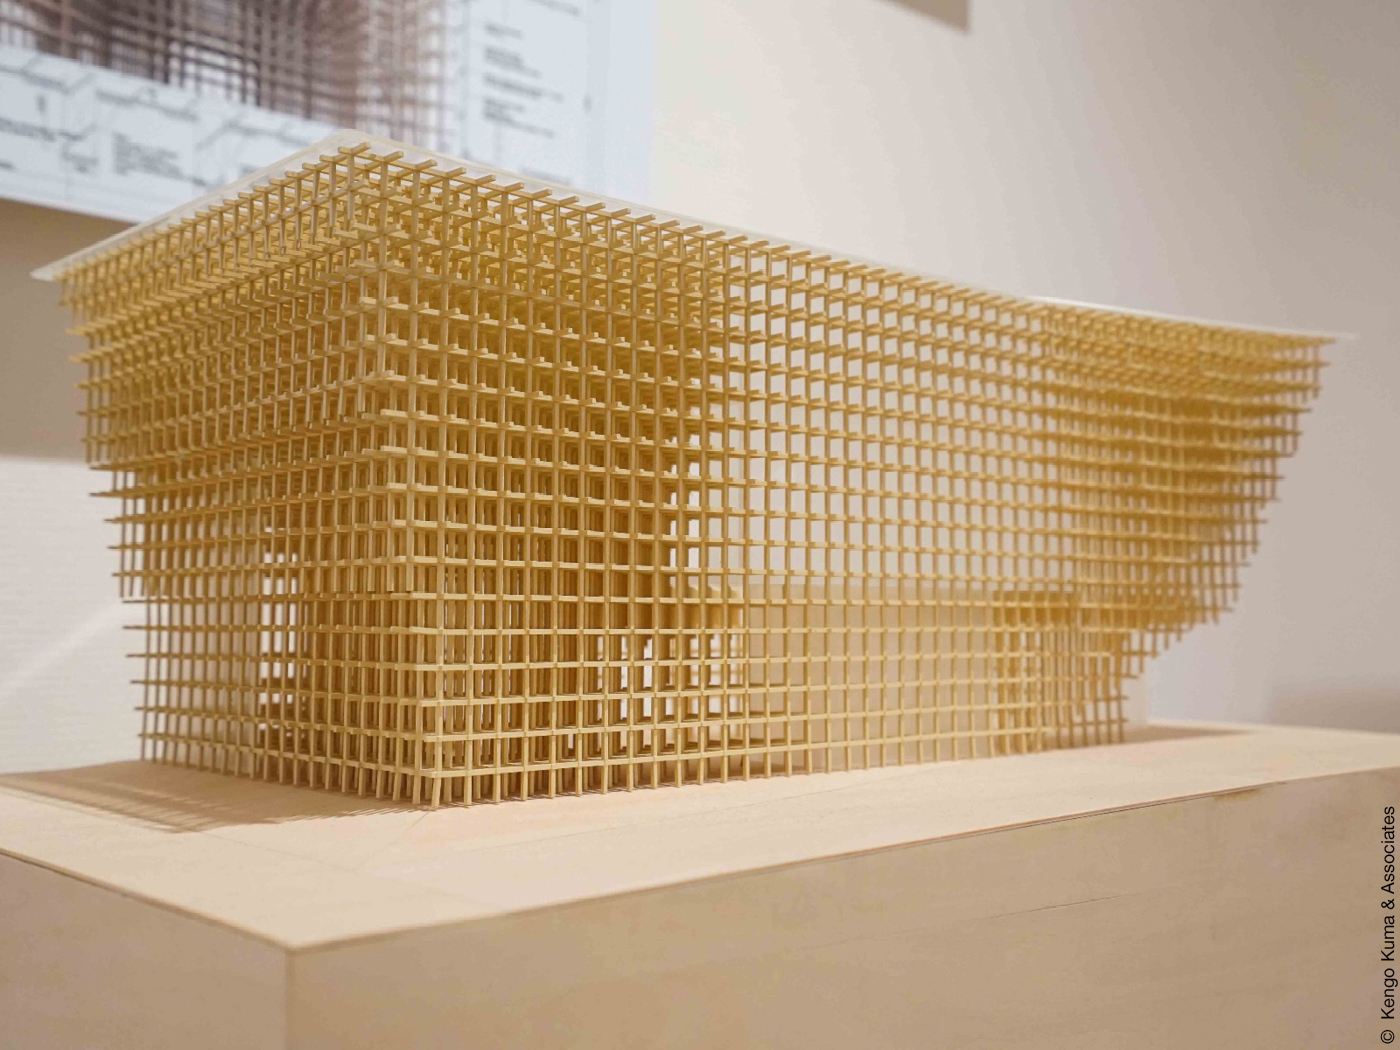 Architekturmodell aus Holz von Kengo Kuma